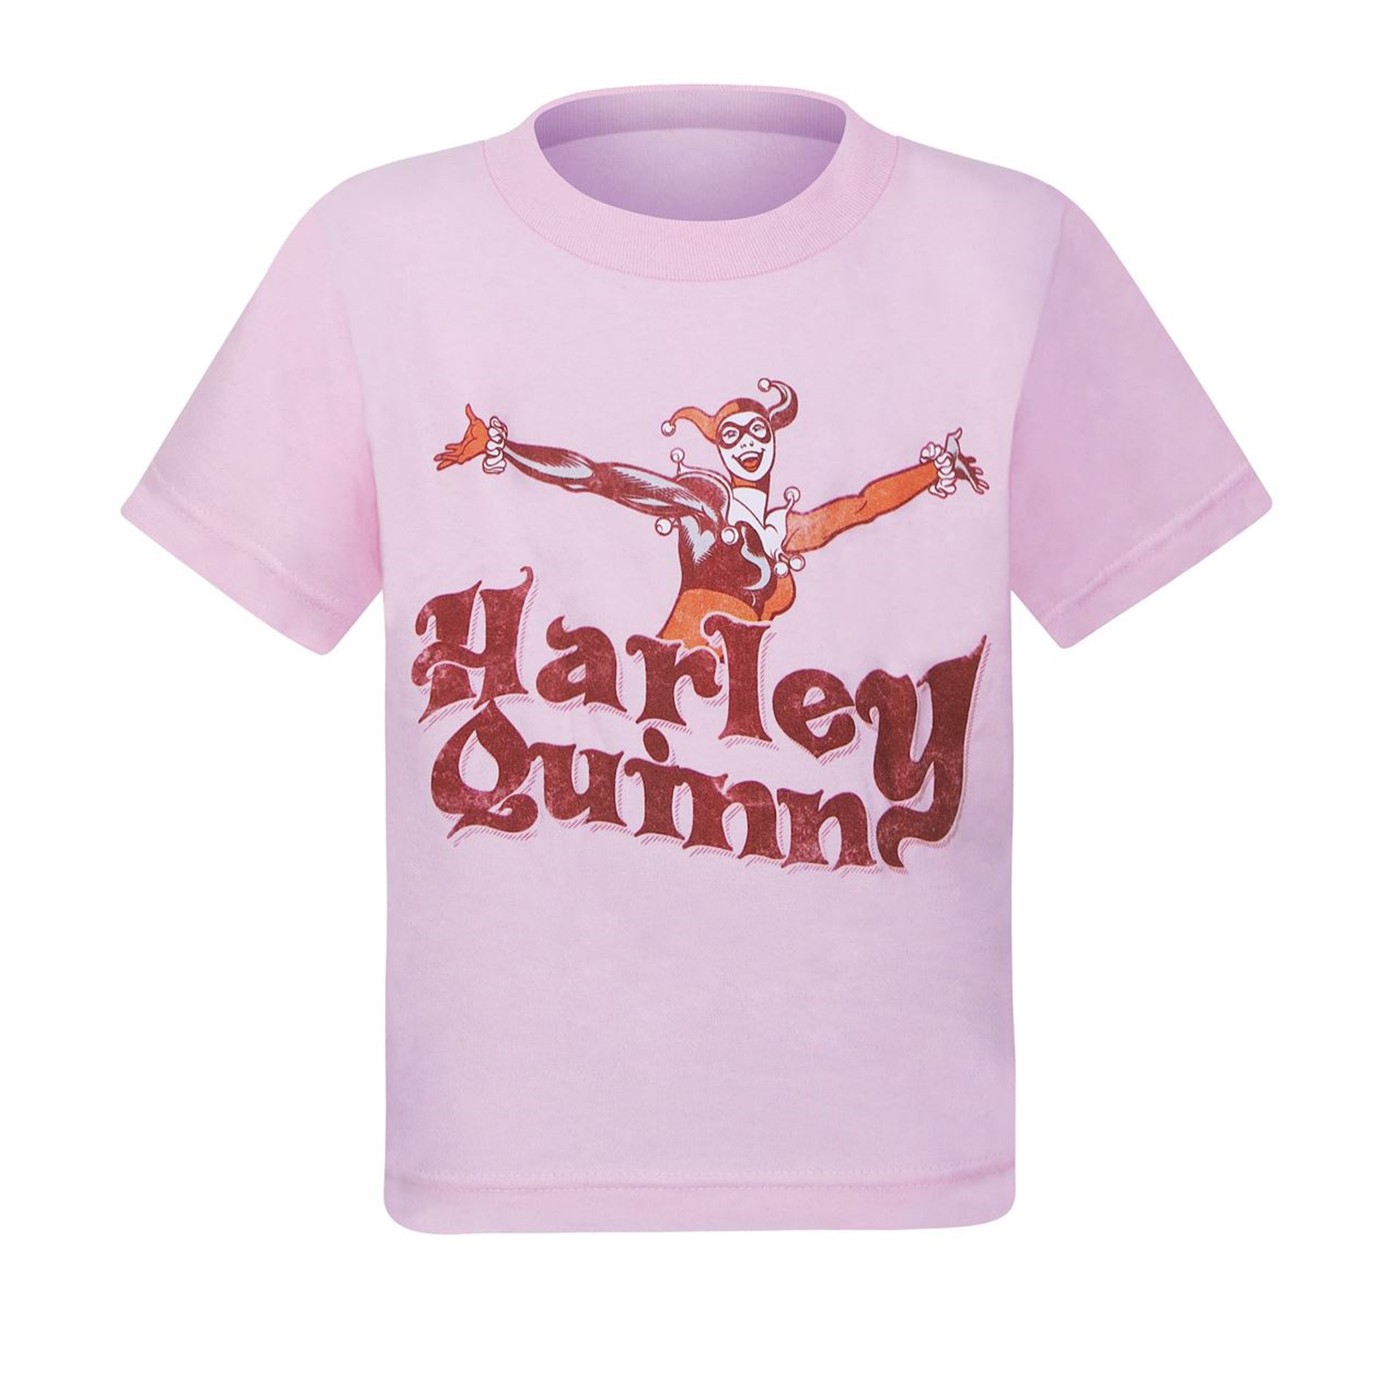 Harley Quinn Pink Kids T-Shirt